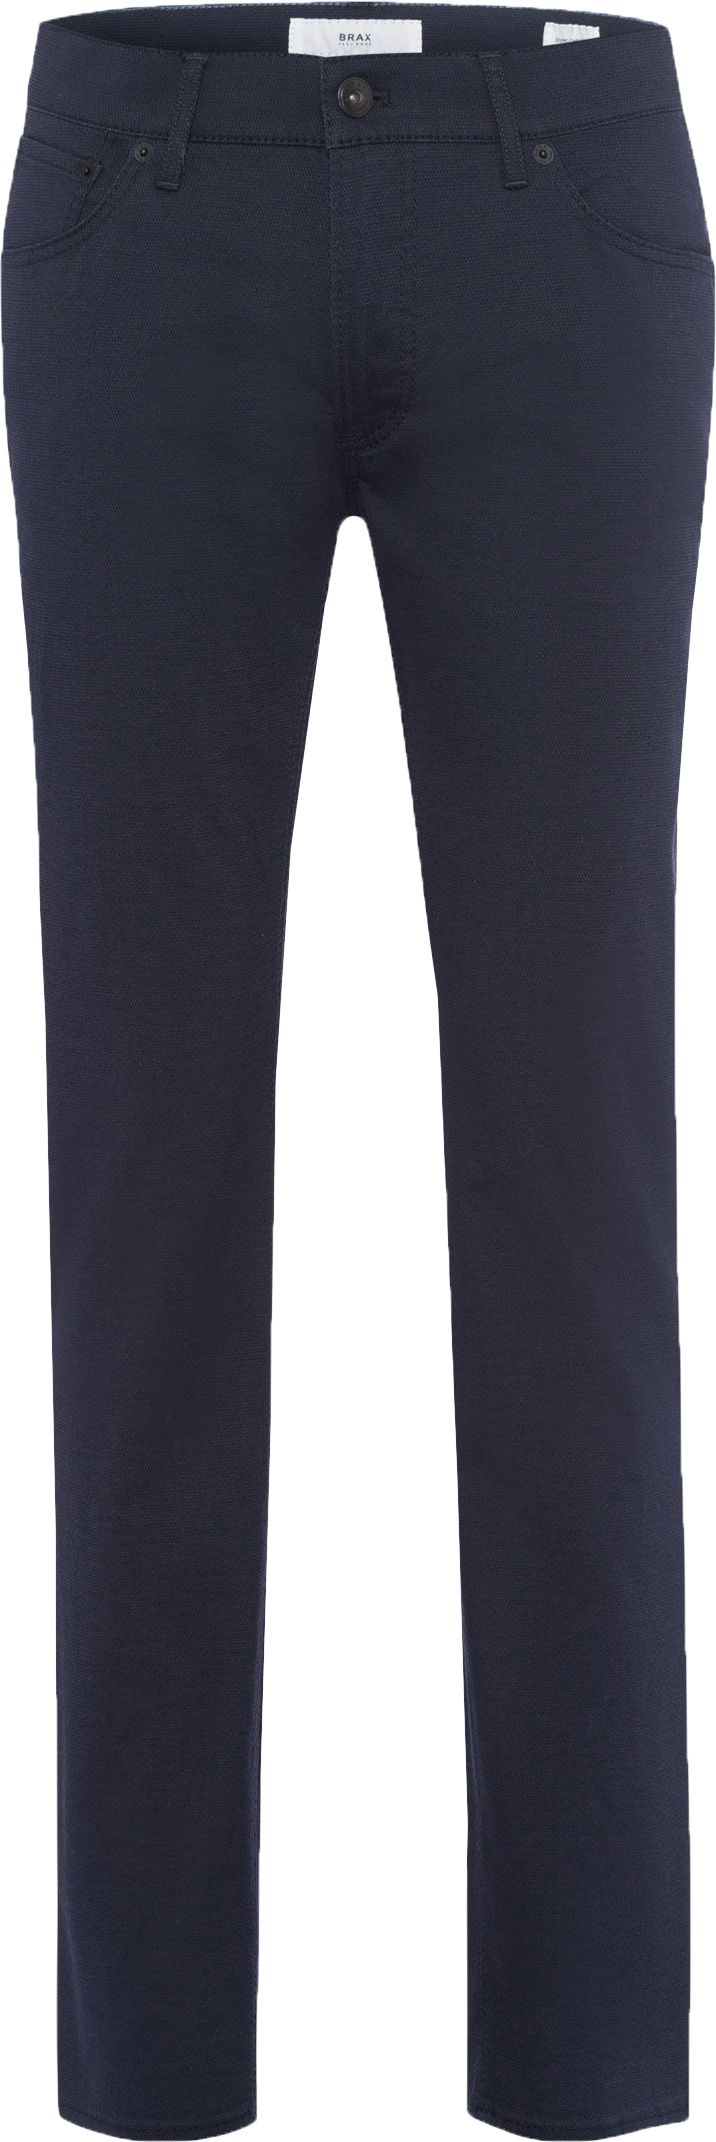 Brax Chuck High Flex Modern Fit Jeans Navy Dark Blue Blue size W 31